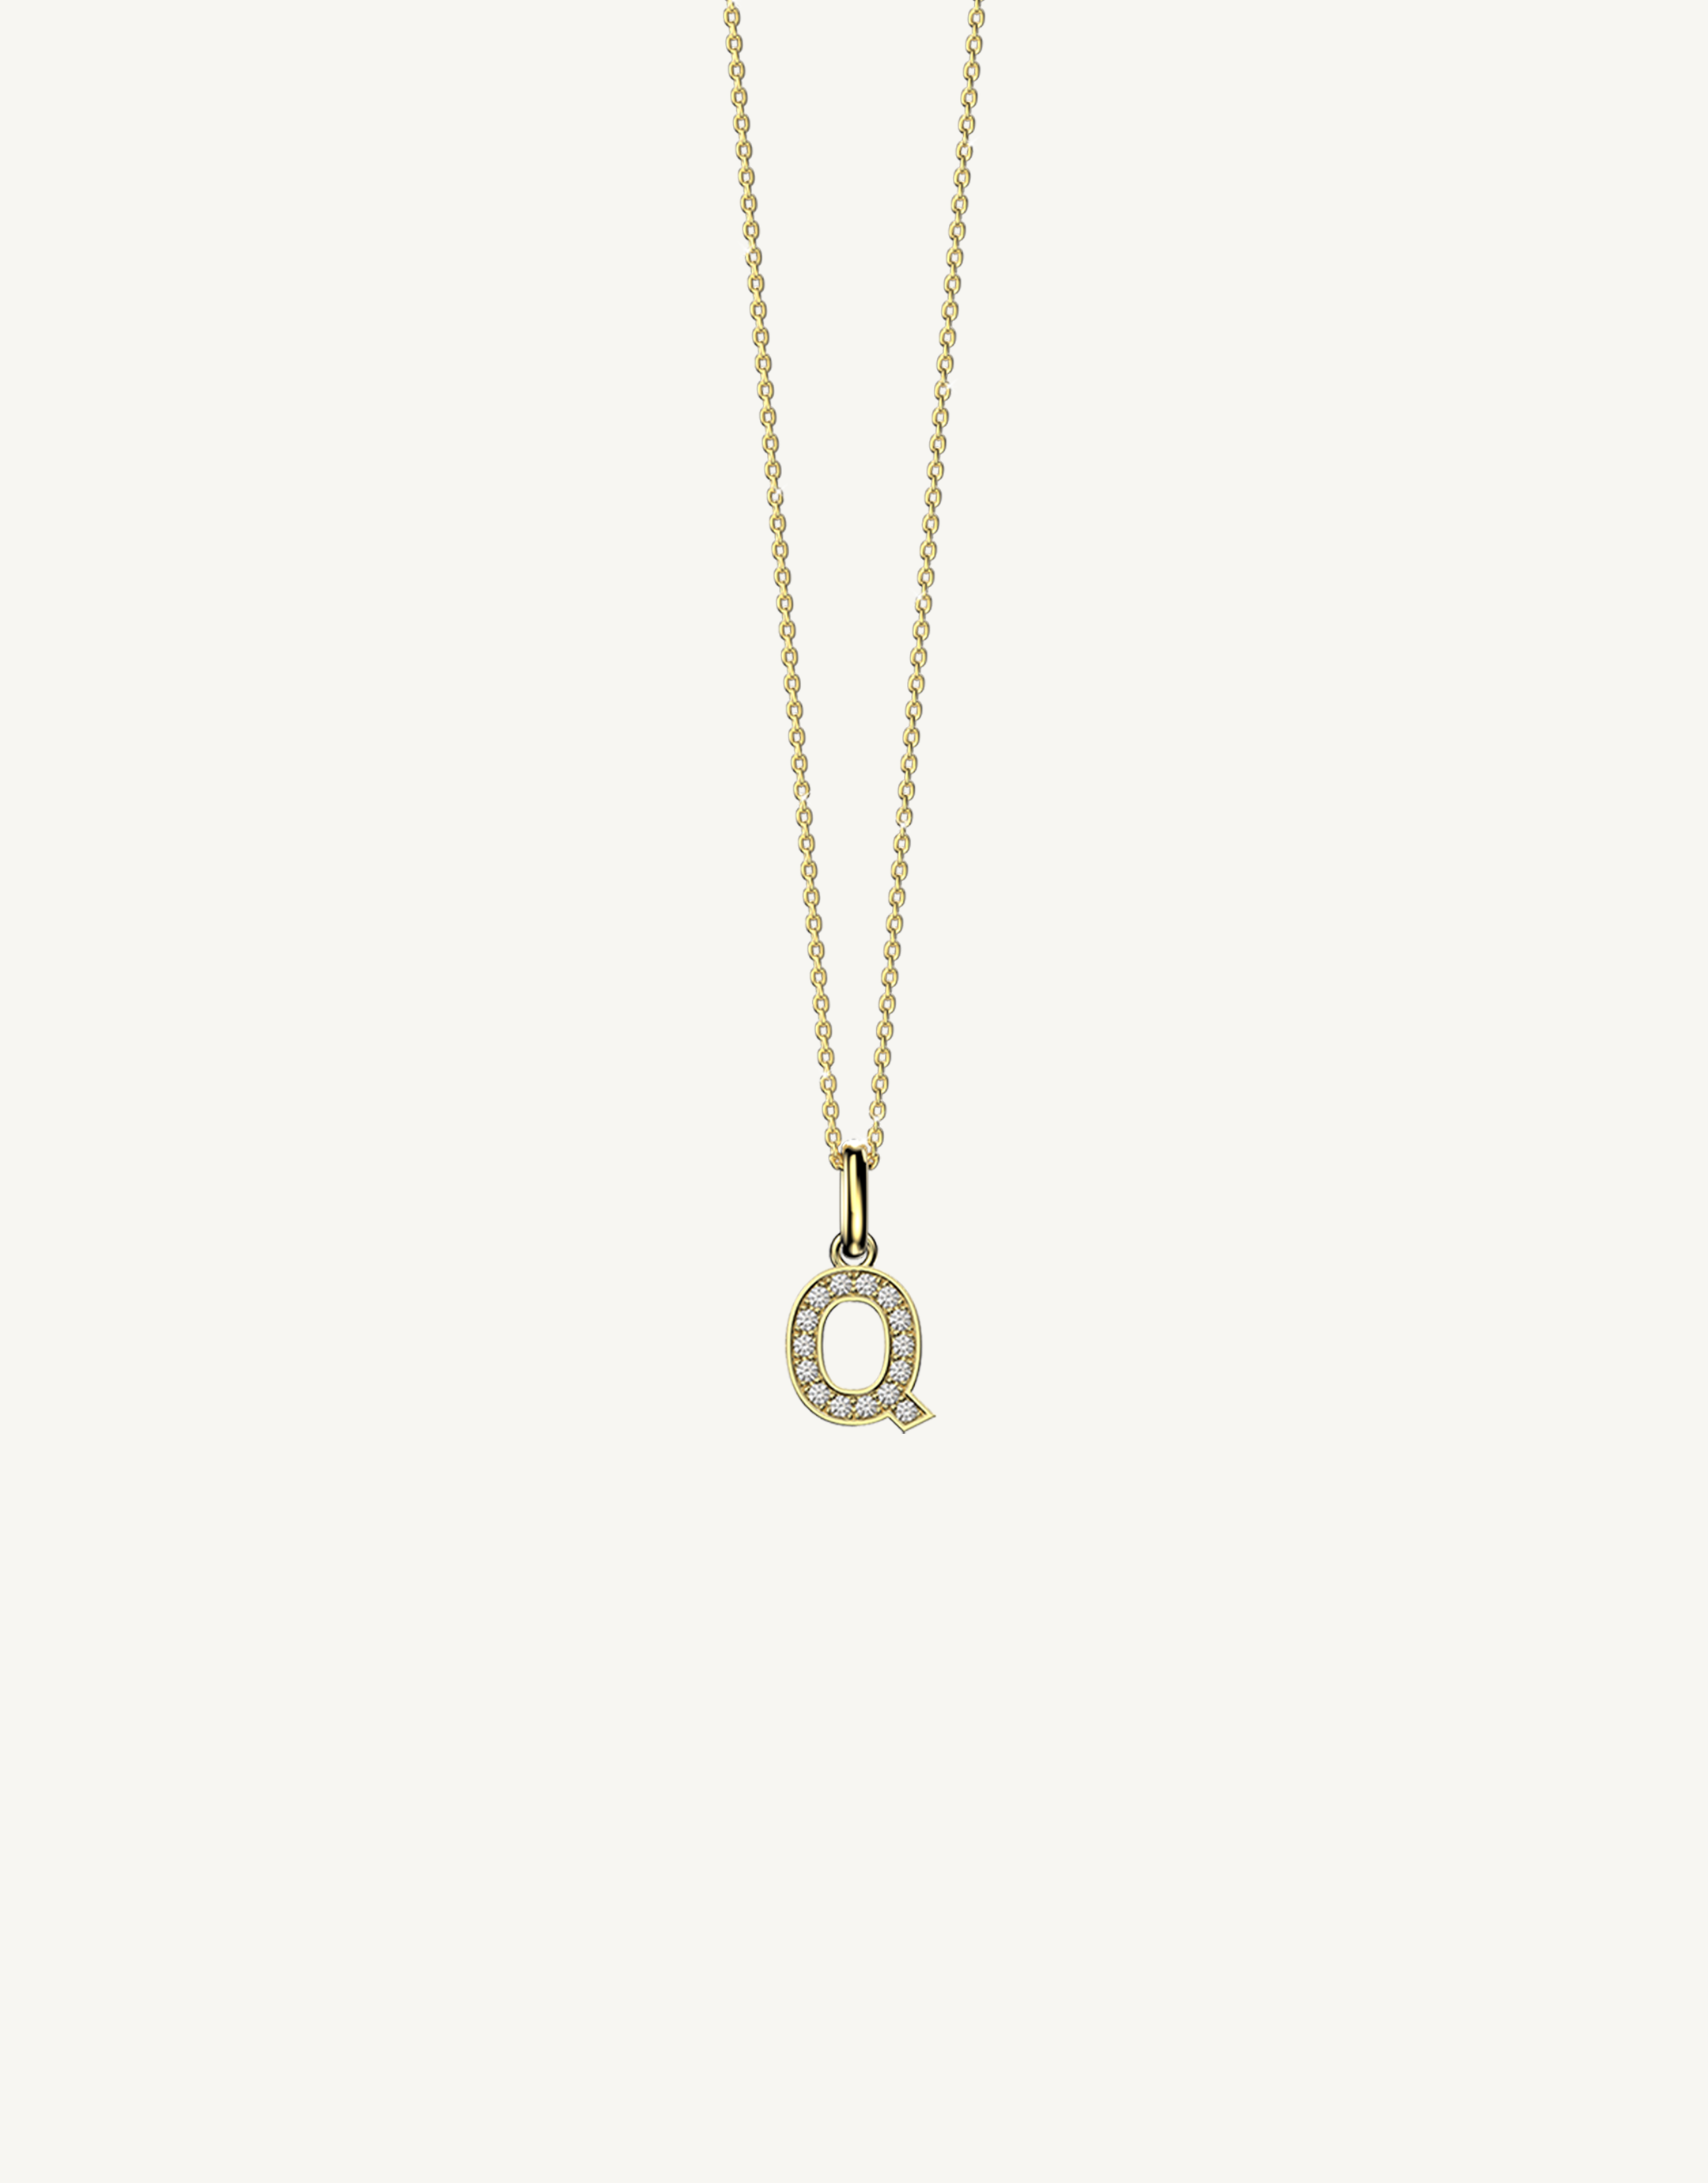 18k yellow gold diamond initial pendant. Luxury custom design. Initial Q.